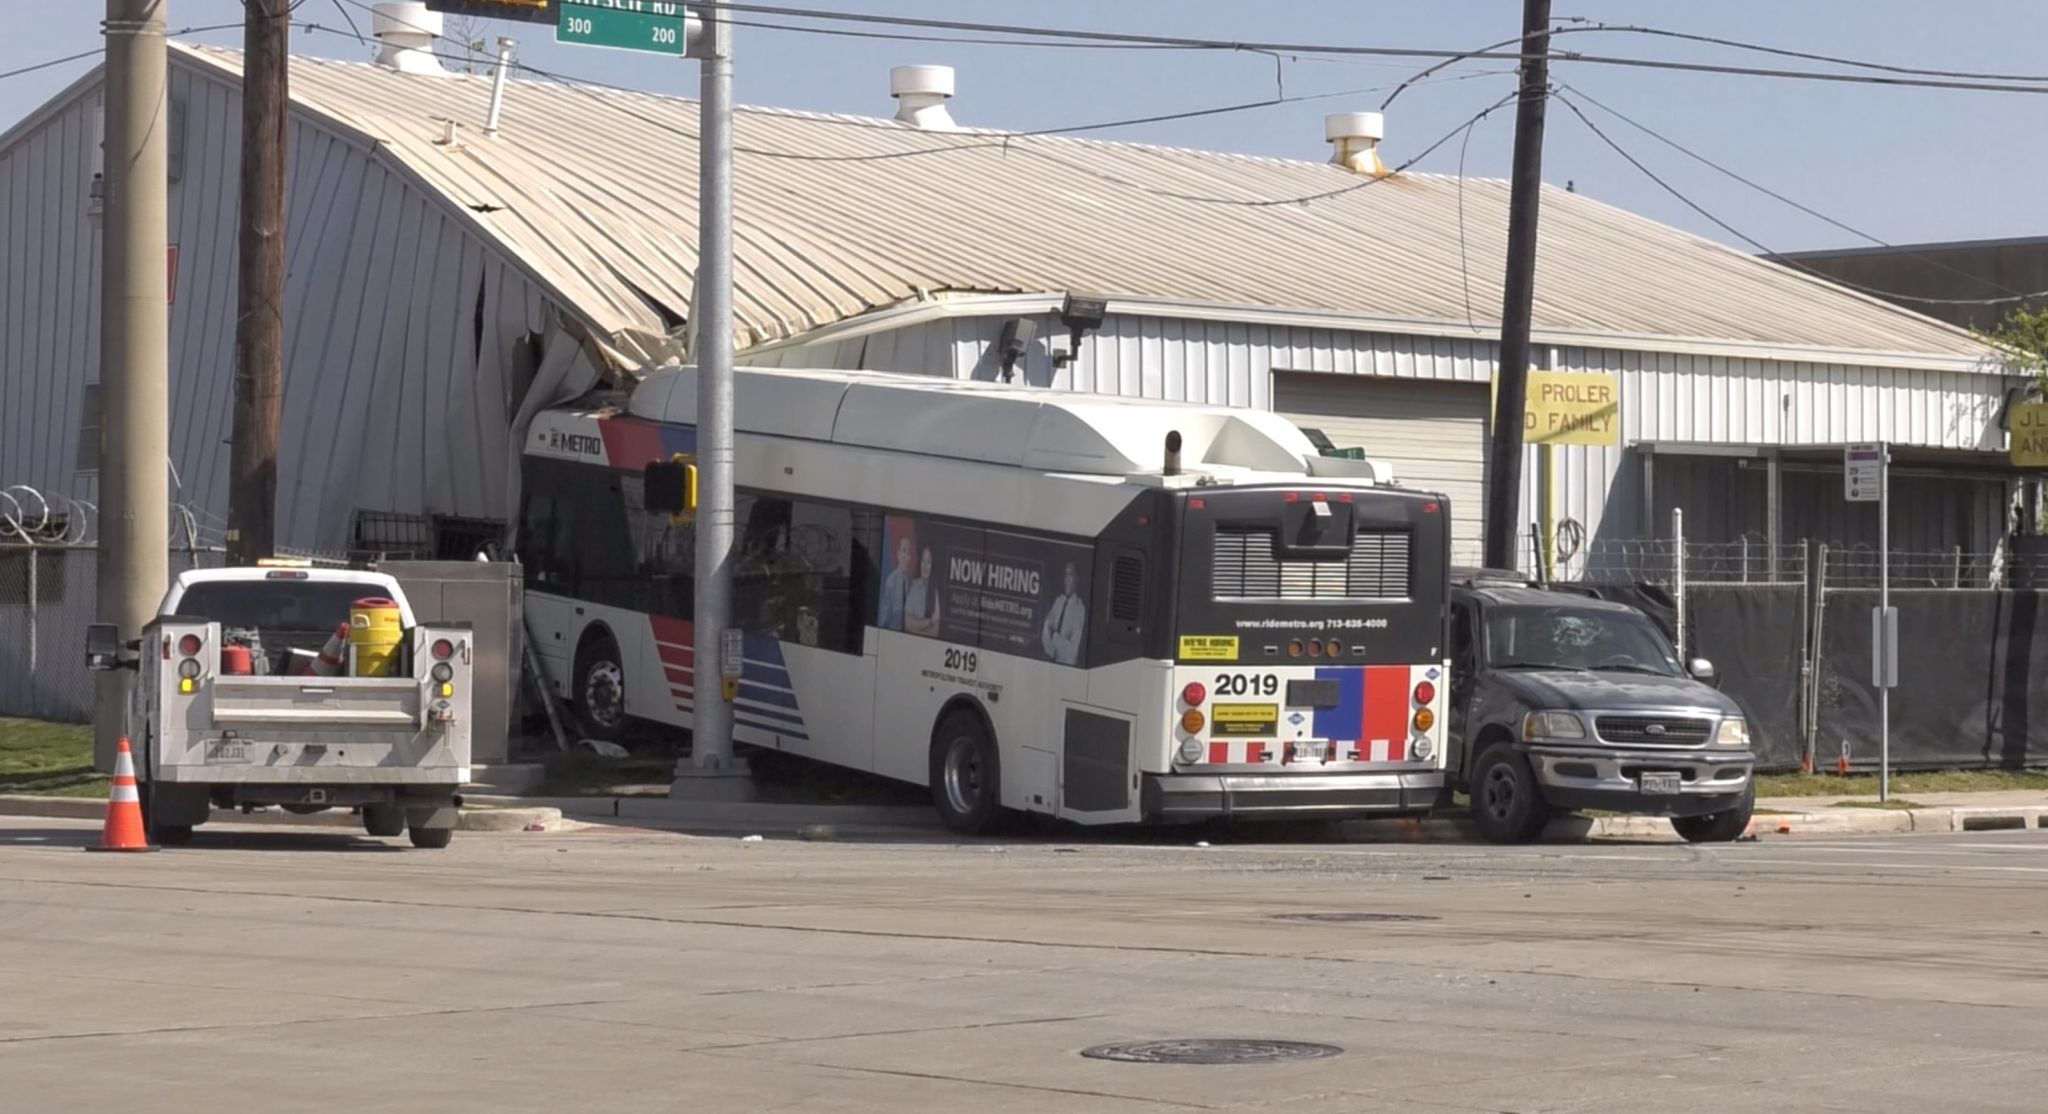 2 hurt as Metro bus crashes into building in east Houston - Houston Chronicle2048 x 1114